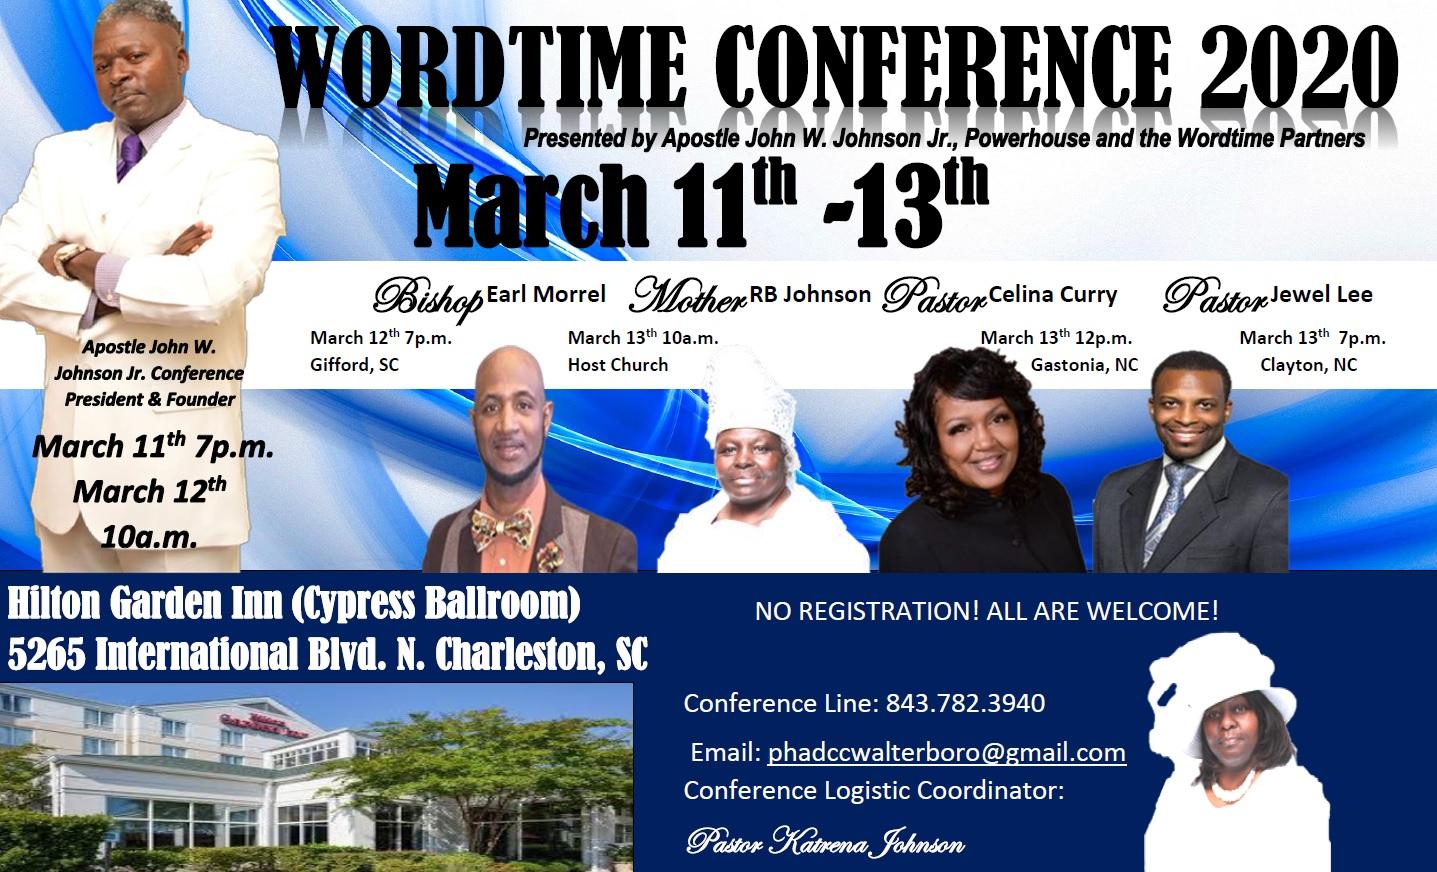 Wordtime 2020 Conference 12 Mar 2020